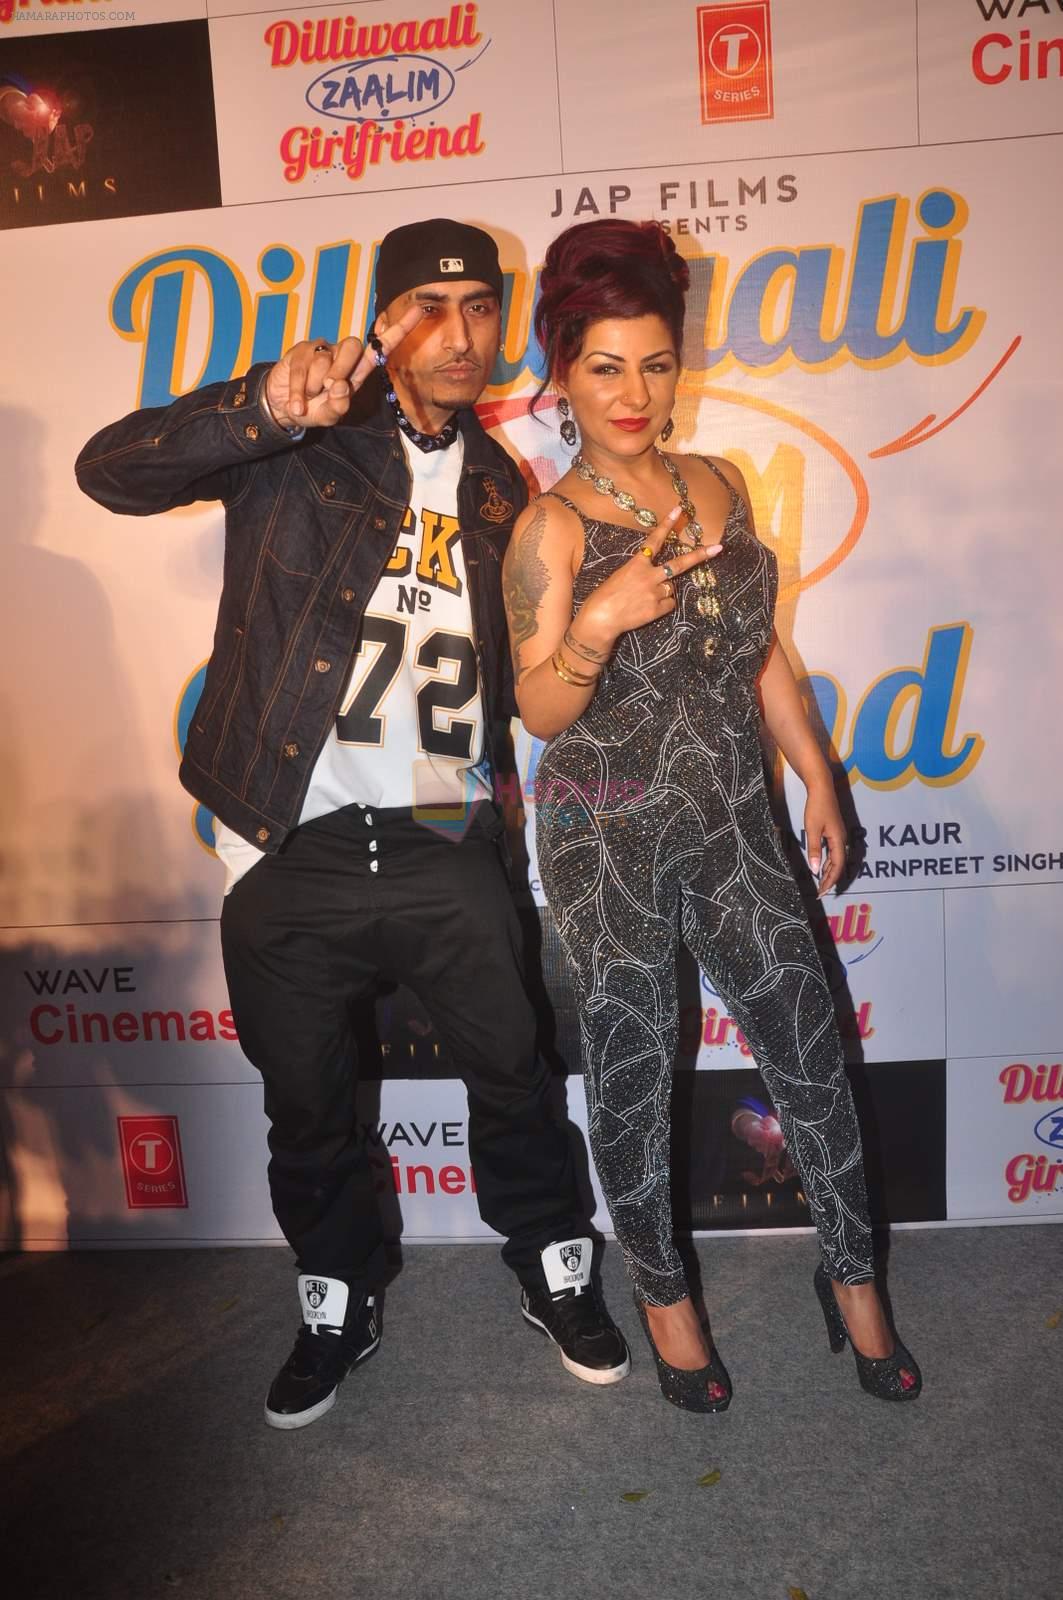 Hard Kaur at Dilliwali Zalim girlfriend music launch in Mumbai on 9th March 2015